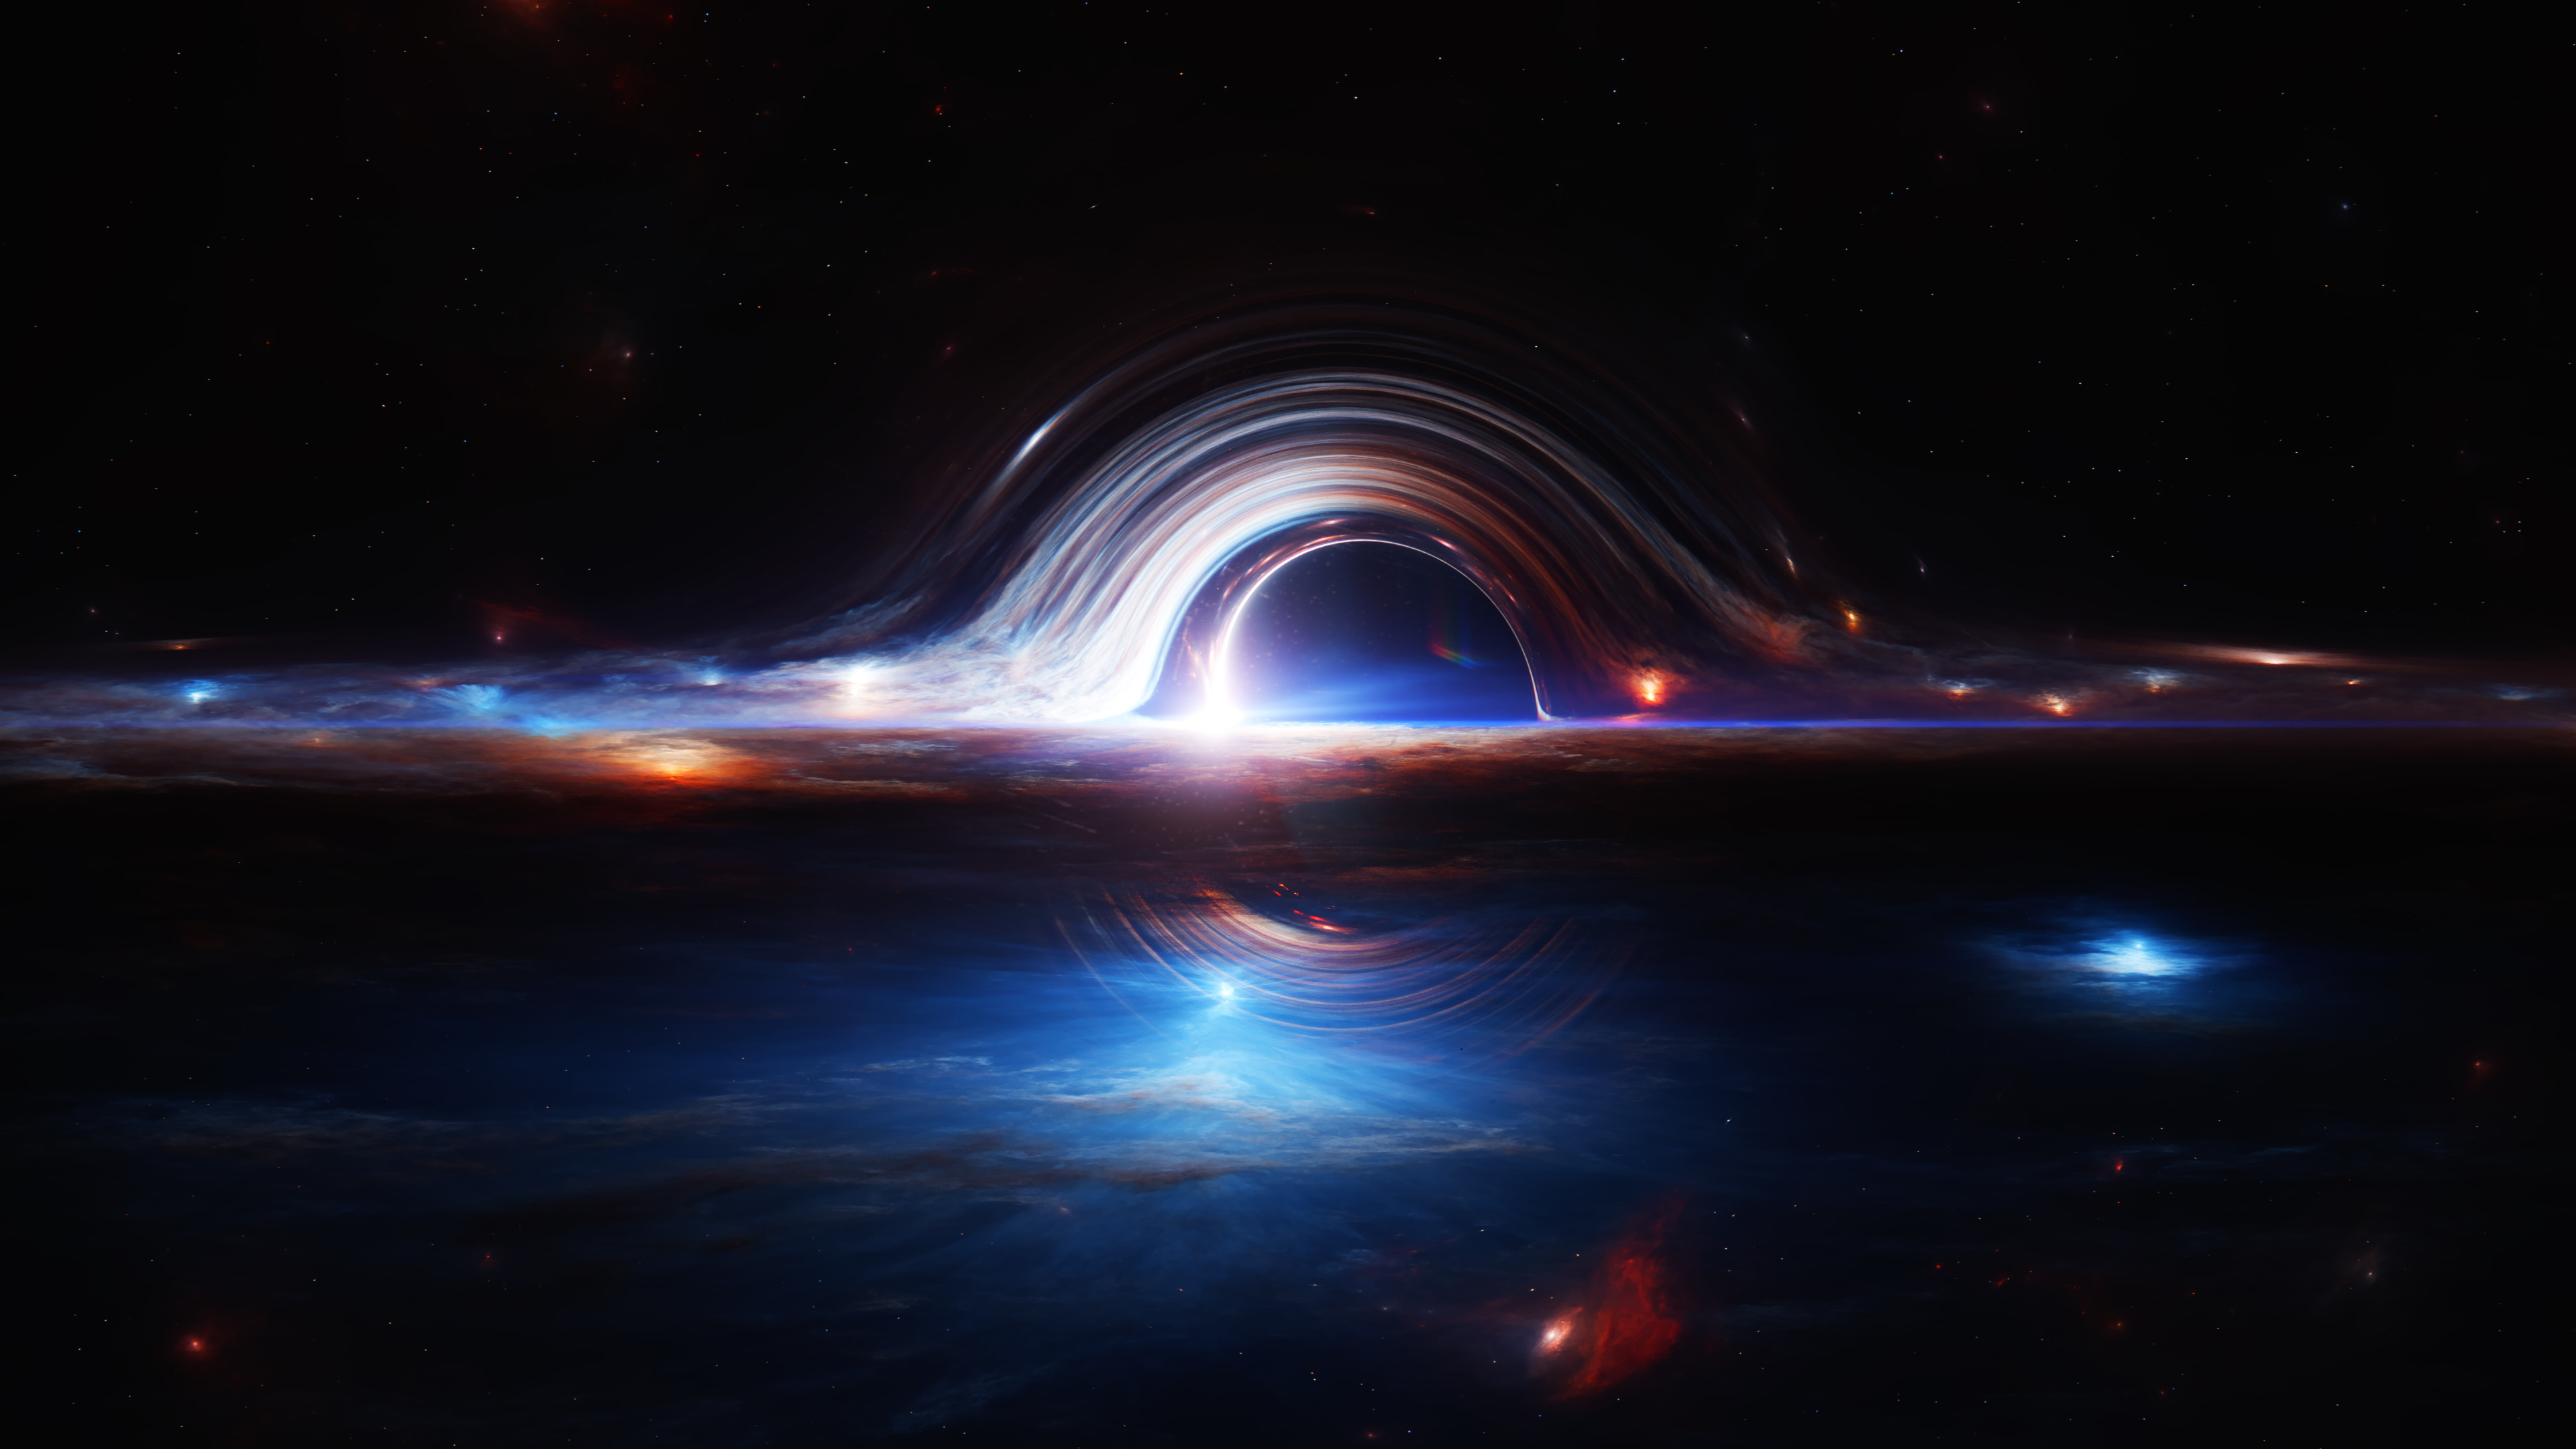 Digital Art Artwork Illustration Science Fiction Space Space Art Black Holes Event Horizon Galaxy St 3840x2160